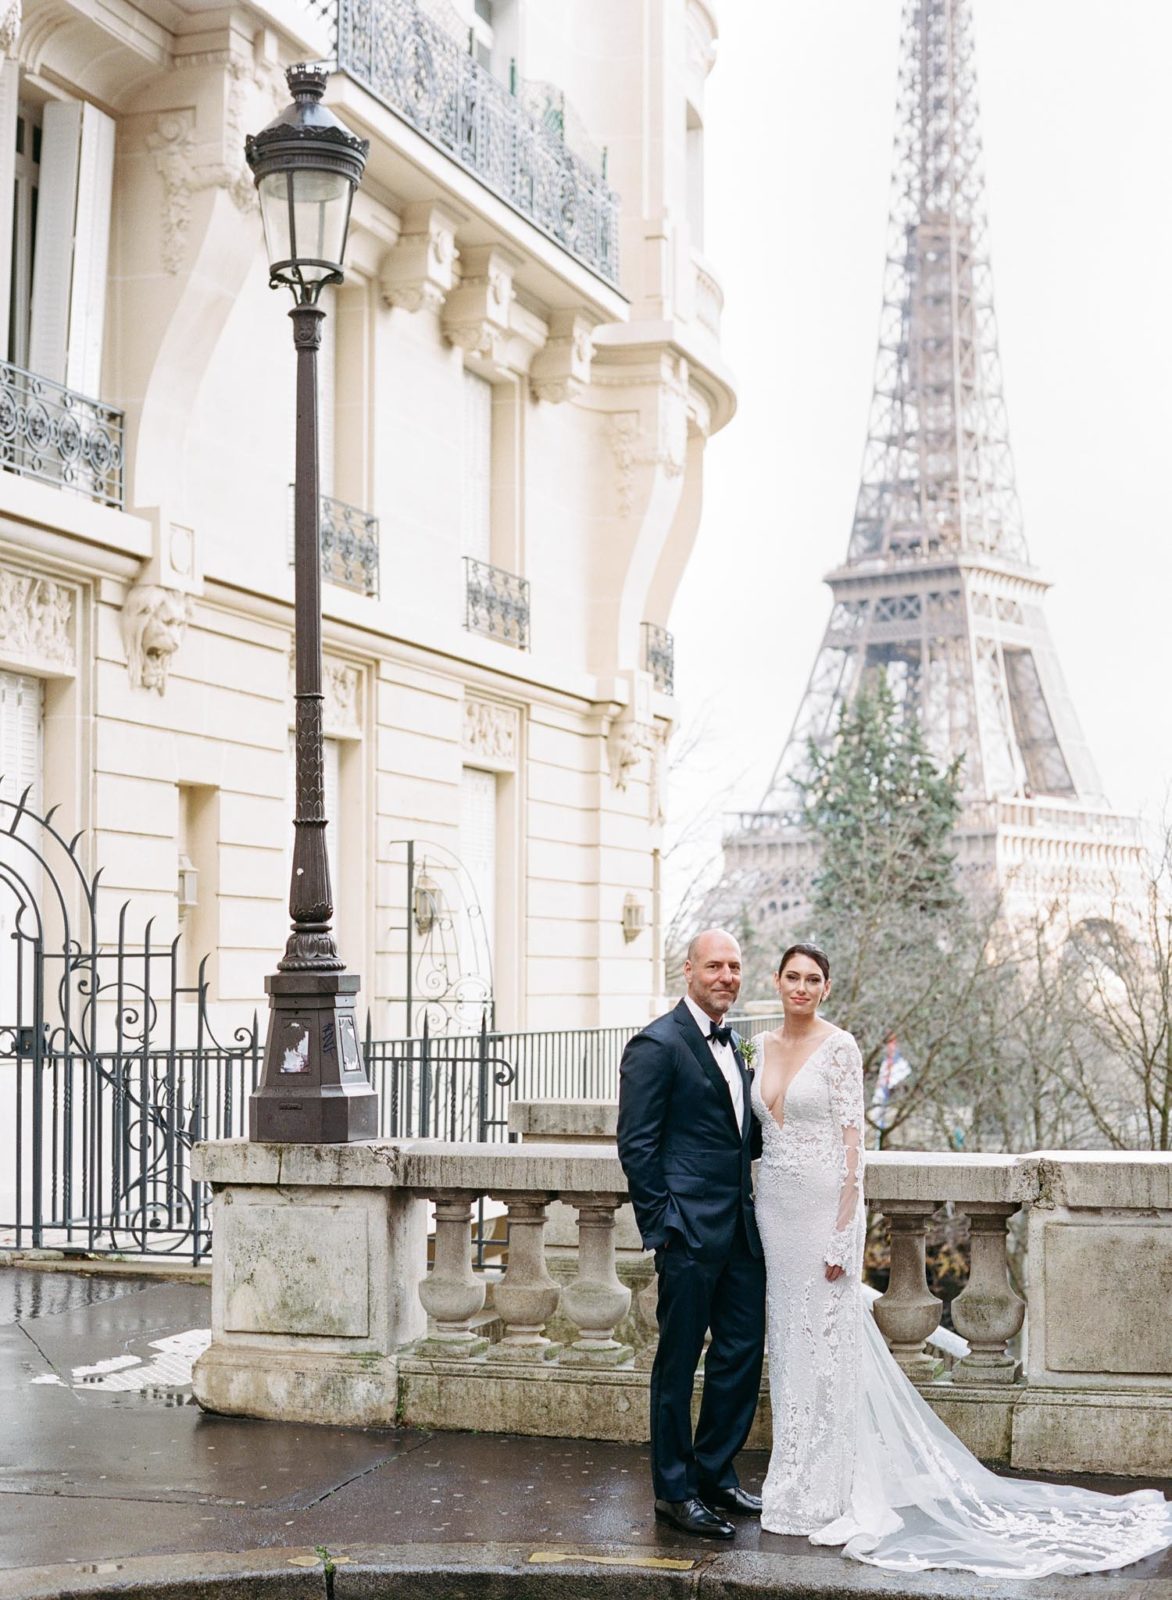 Ritz Paris Wedding Photographer | France Destination Wedding | Luxury Film Photography | Molly Carr Photography